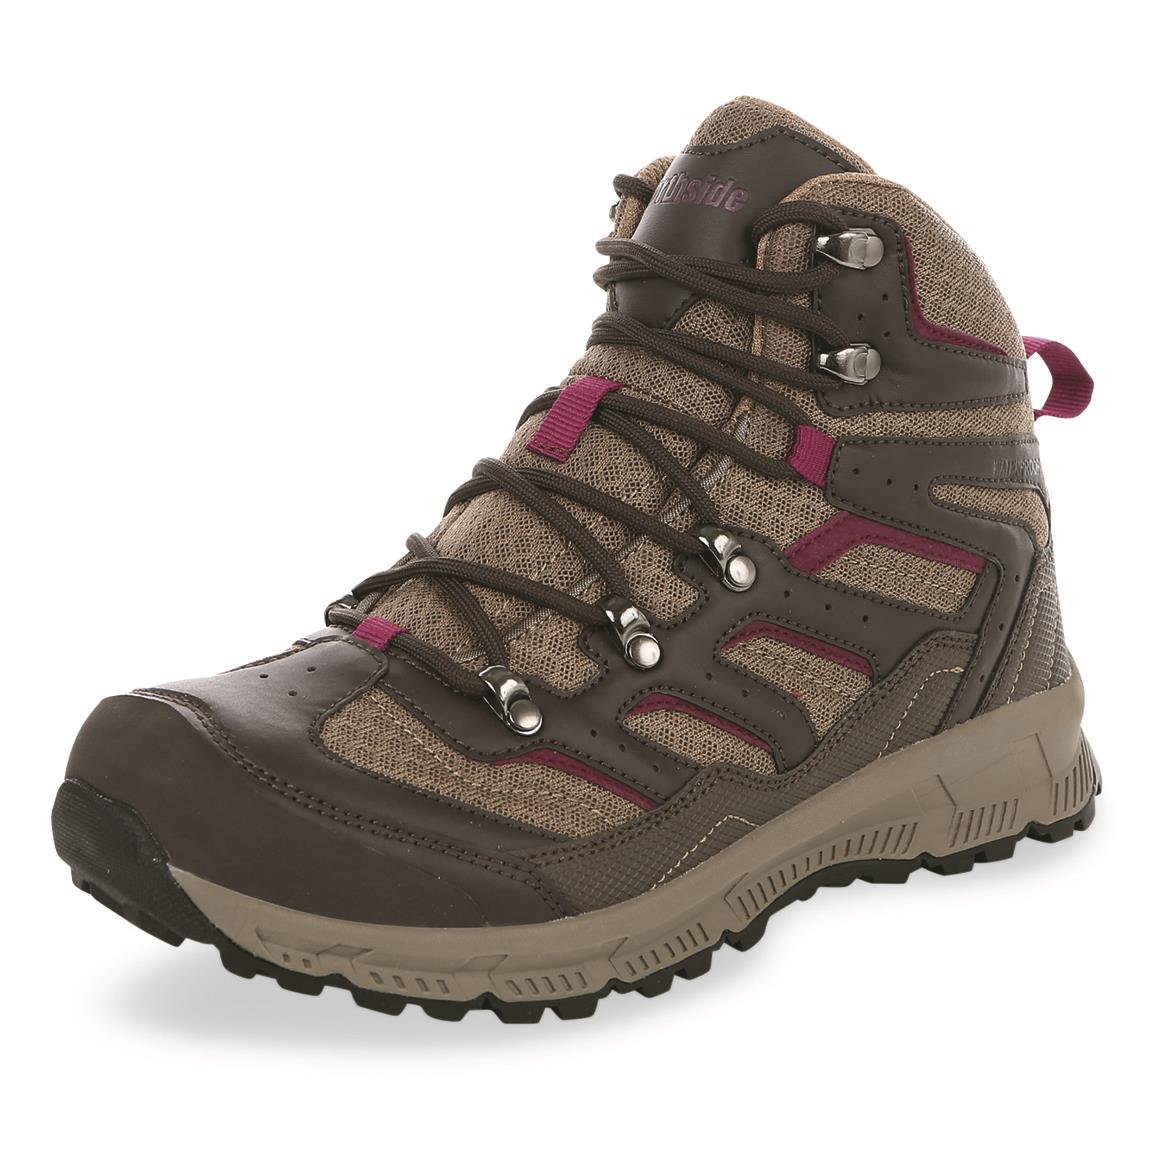 Northside Women's Croswell Mid Waterproof Hiking Boots, Brown/wine